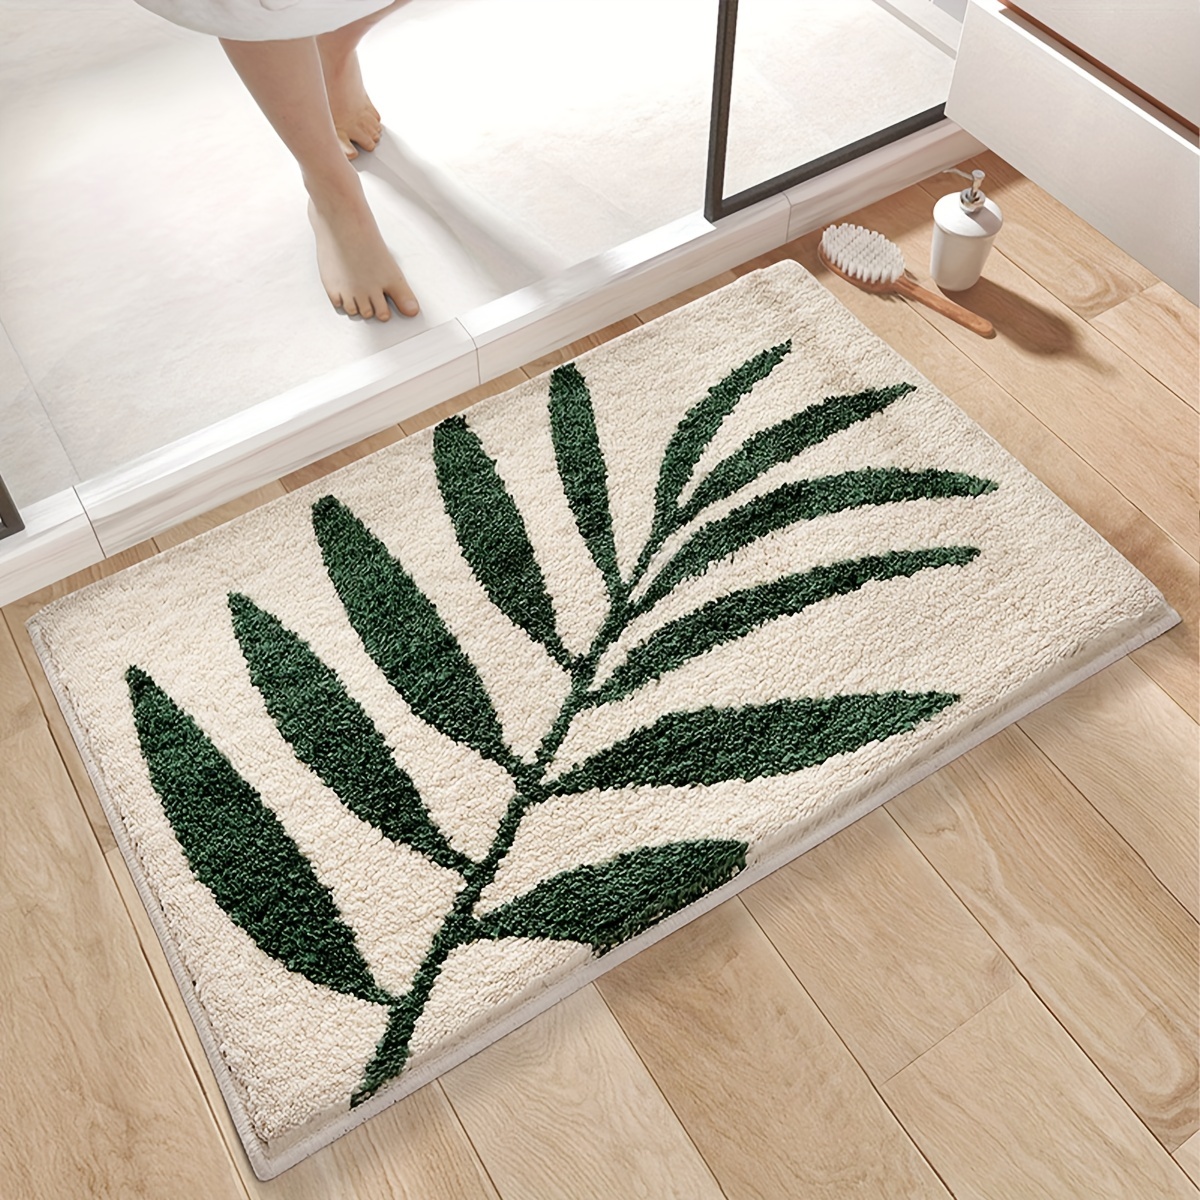 Tropical Green Leaf Bathroom Rugs 16X24 inch Jungle Palm Bath Mat